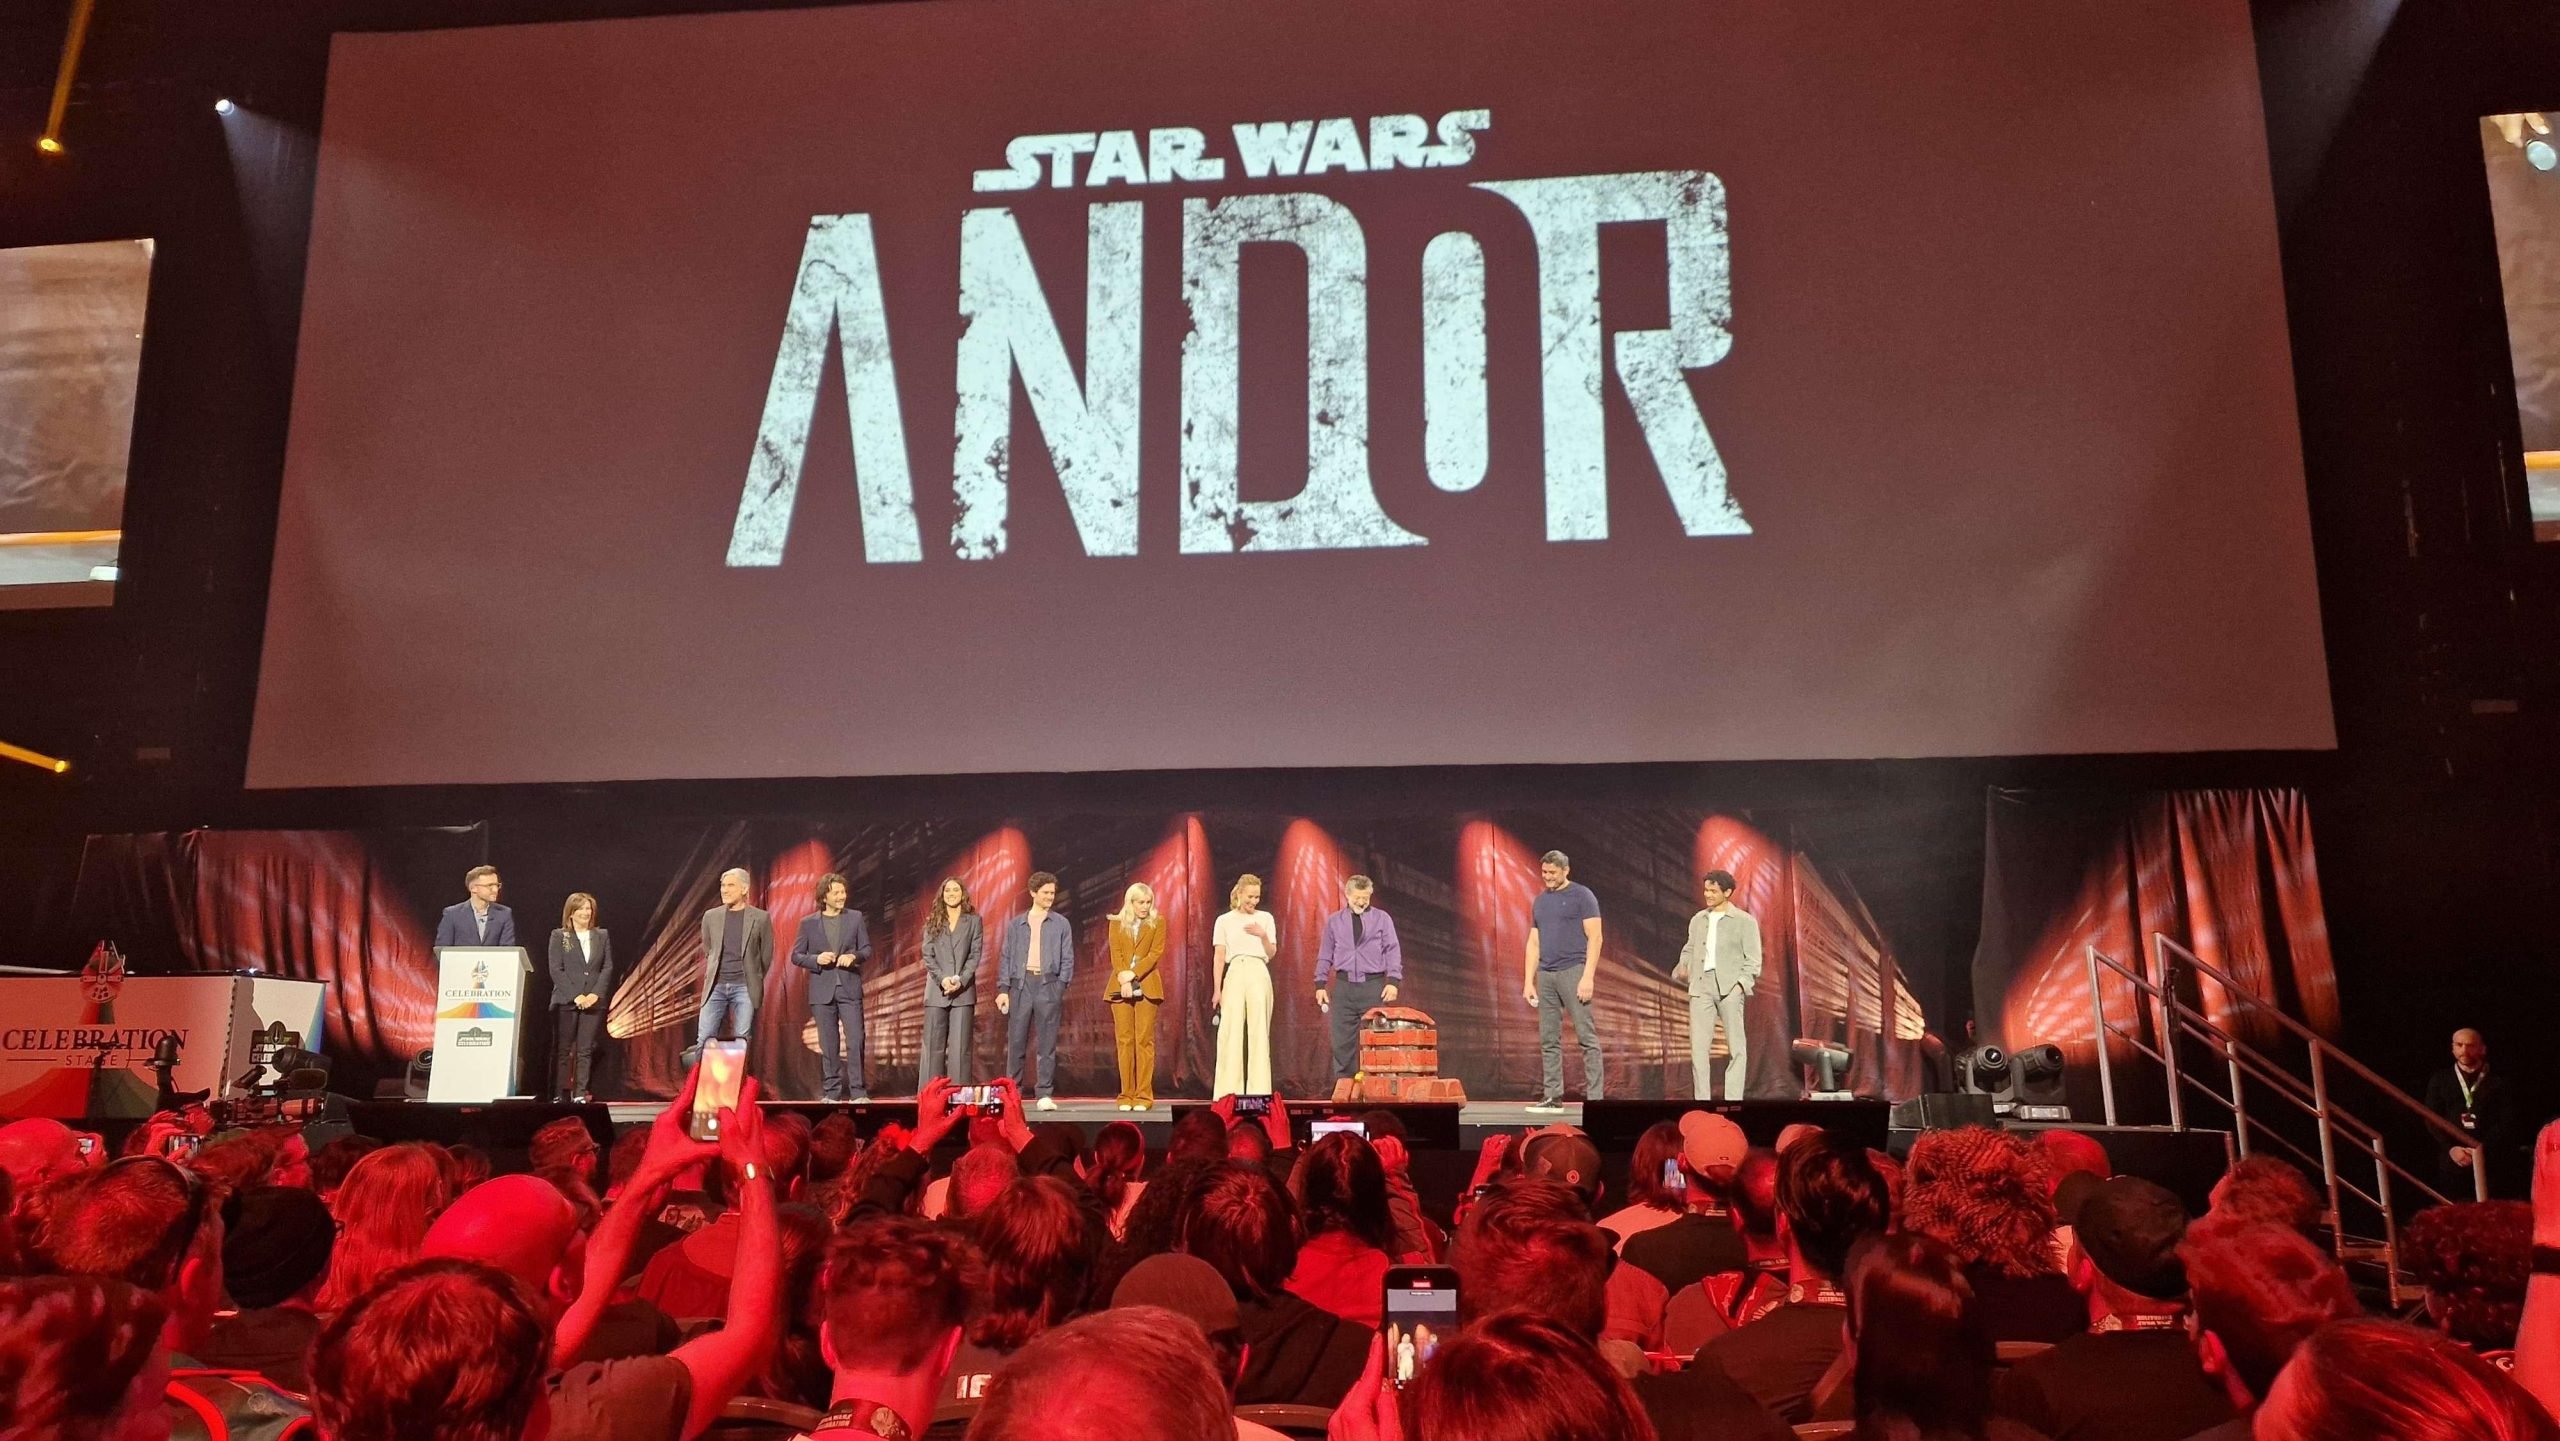 Star Wars: Andor Season 2 Gets Release Update